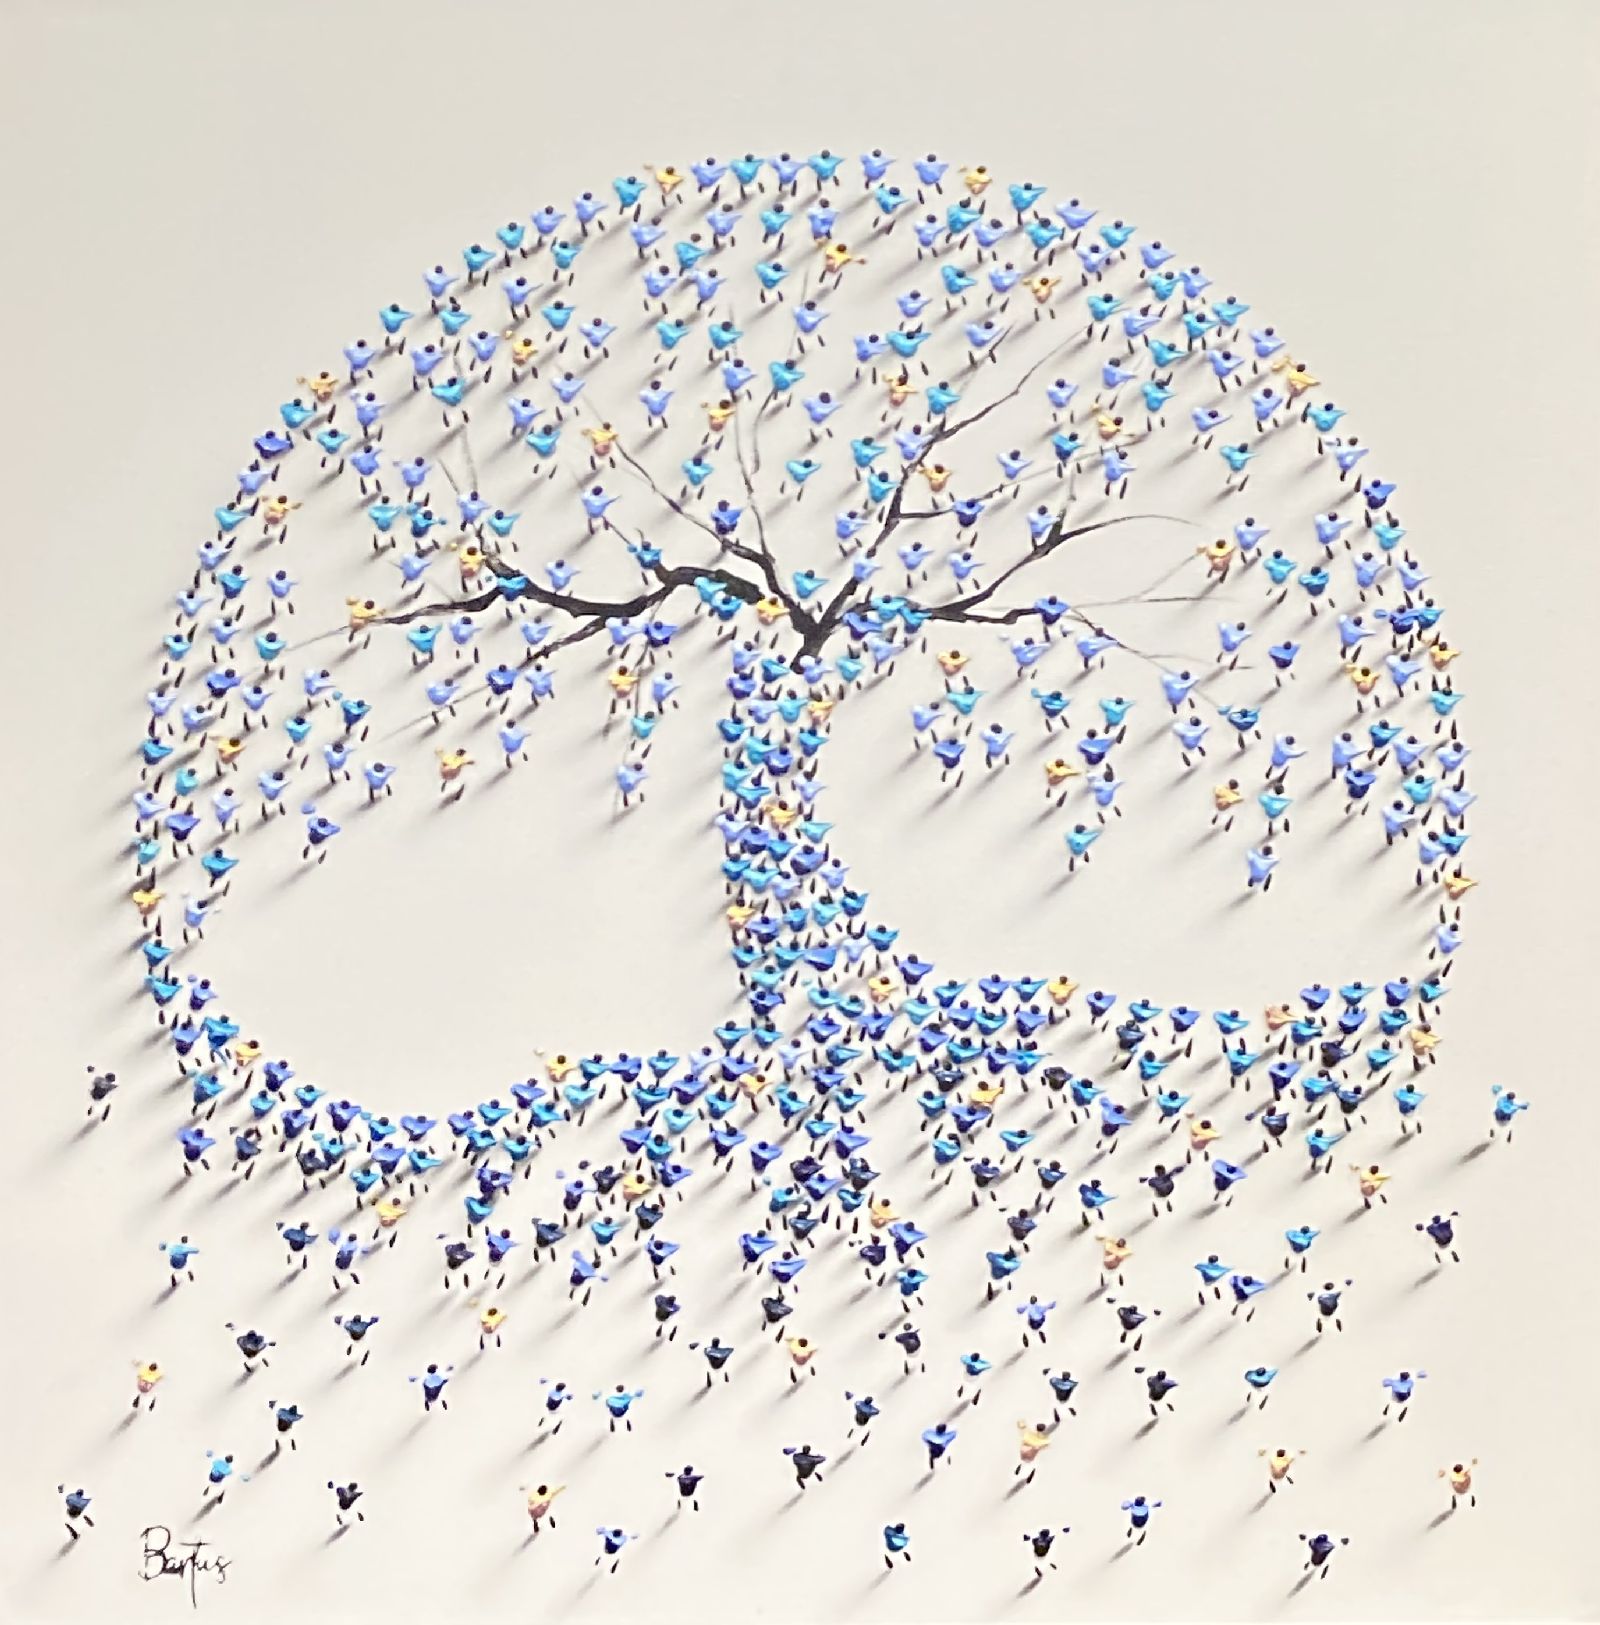 Tree of life III by Francisco Bartus